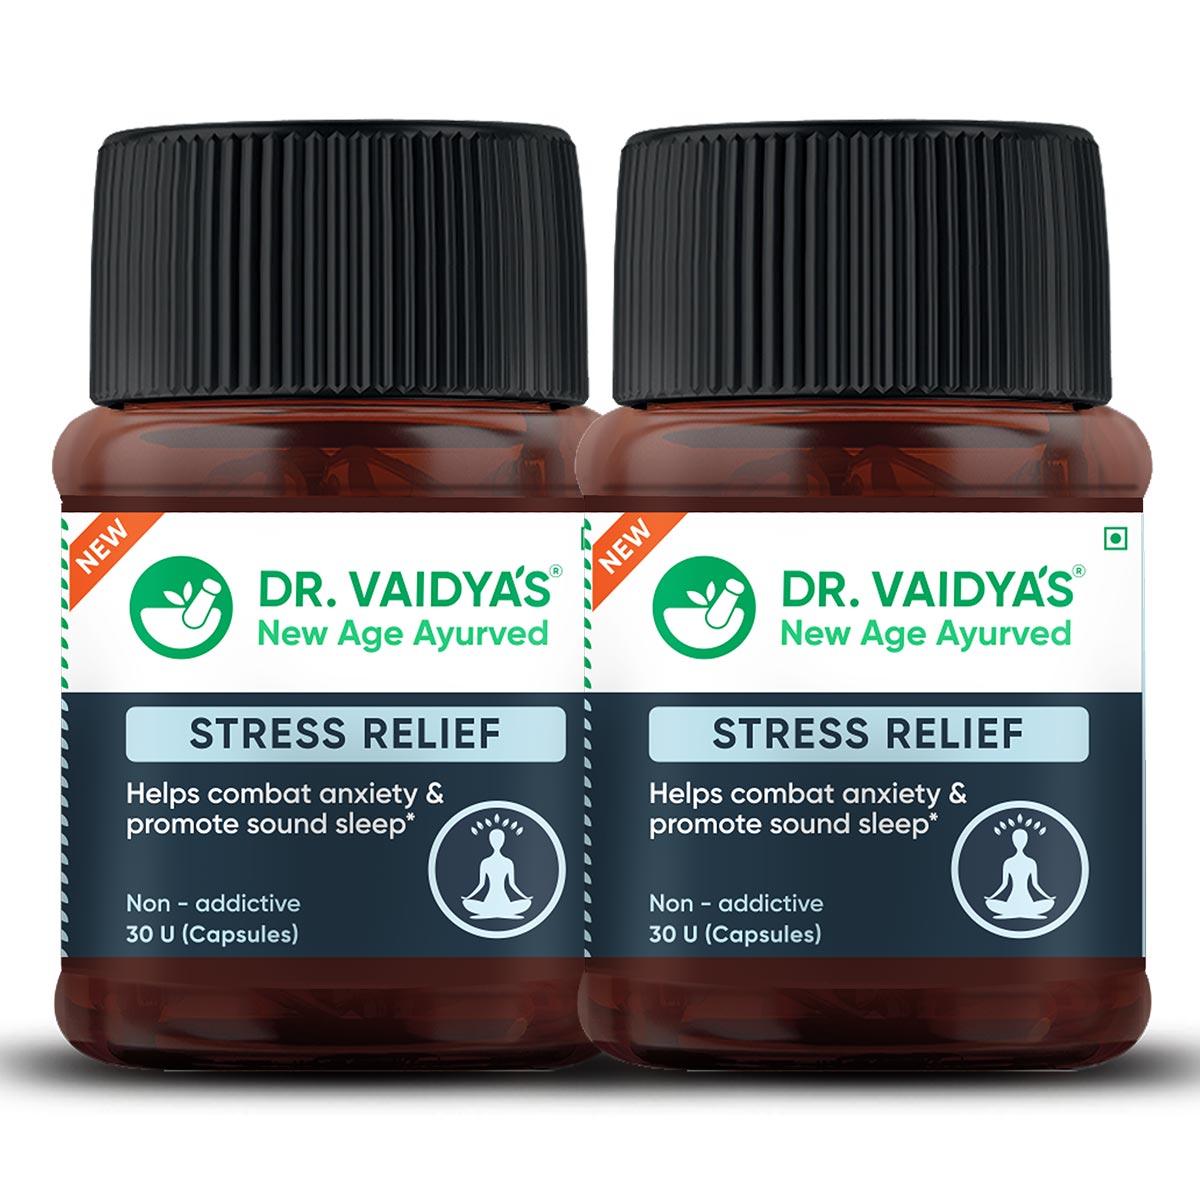 Dr. Vaidya's Stress Relief